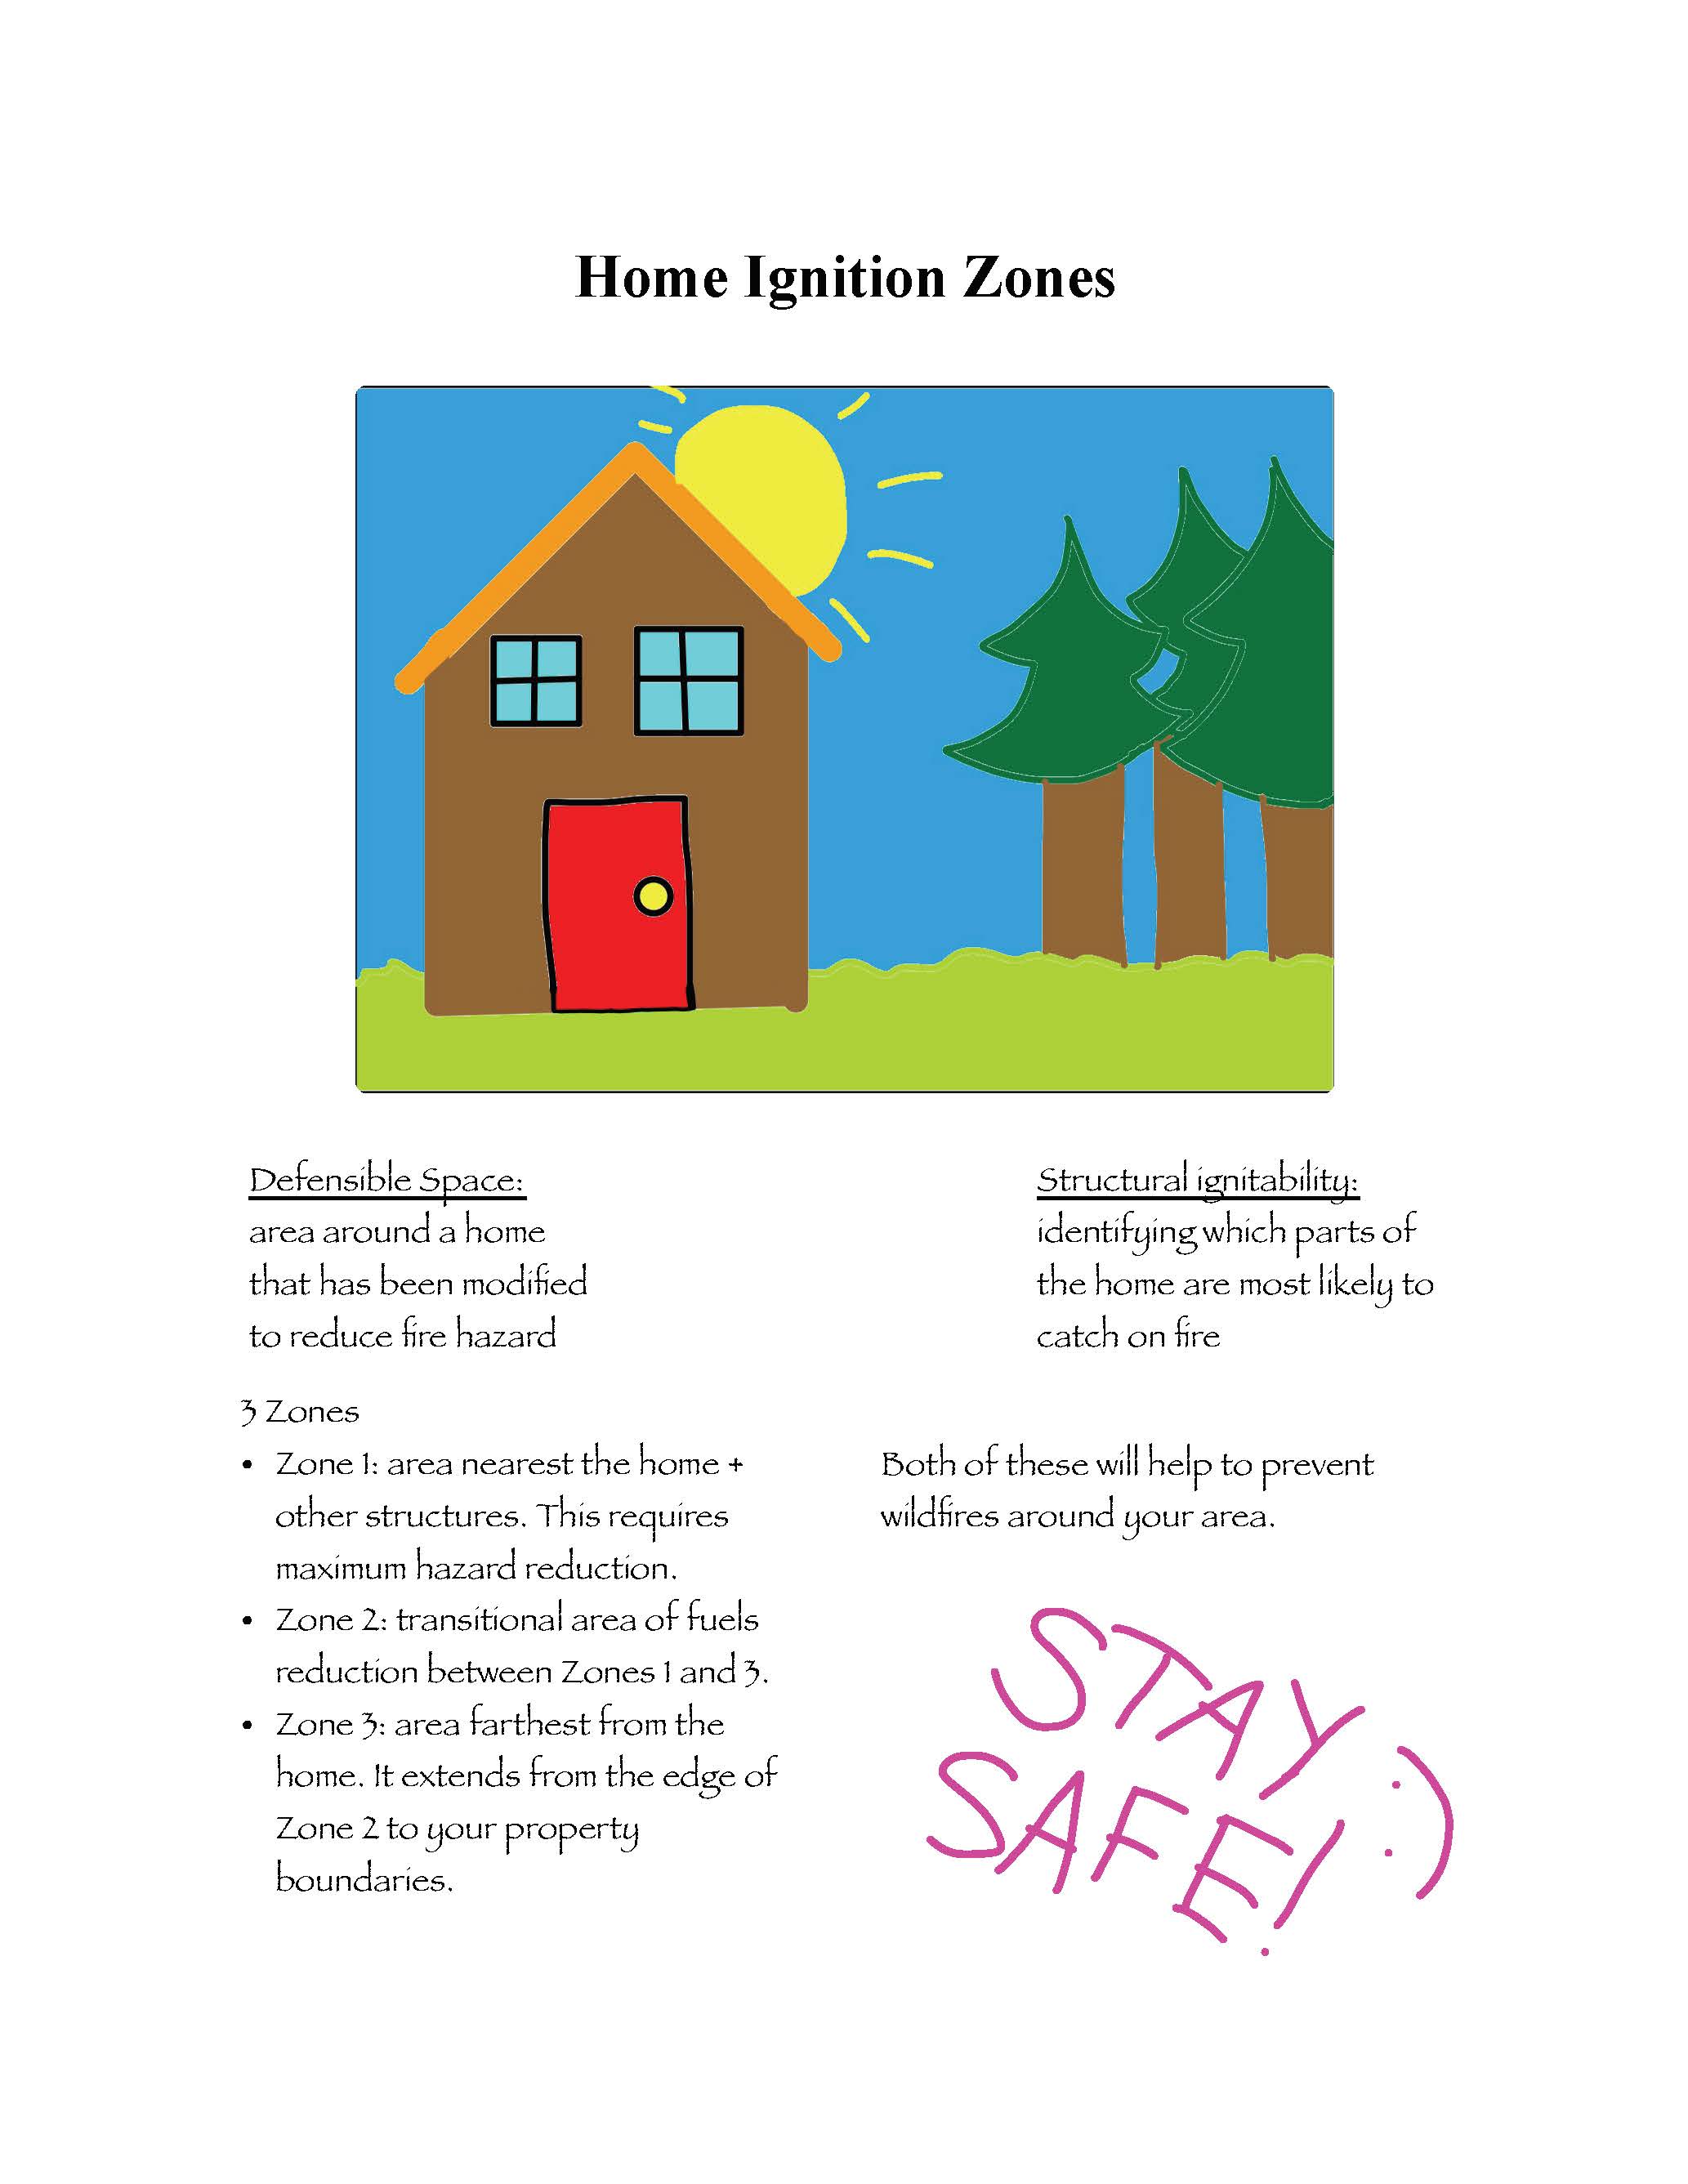 Home Ignition Zones written description and diagram 